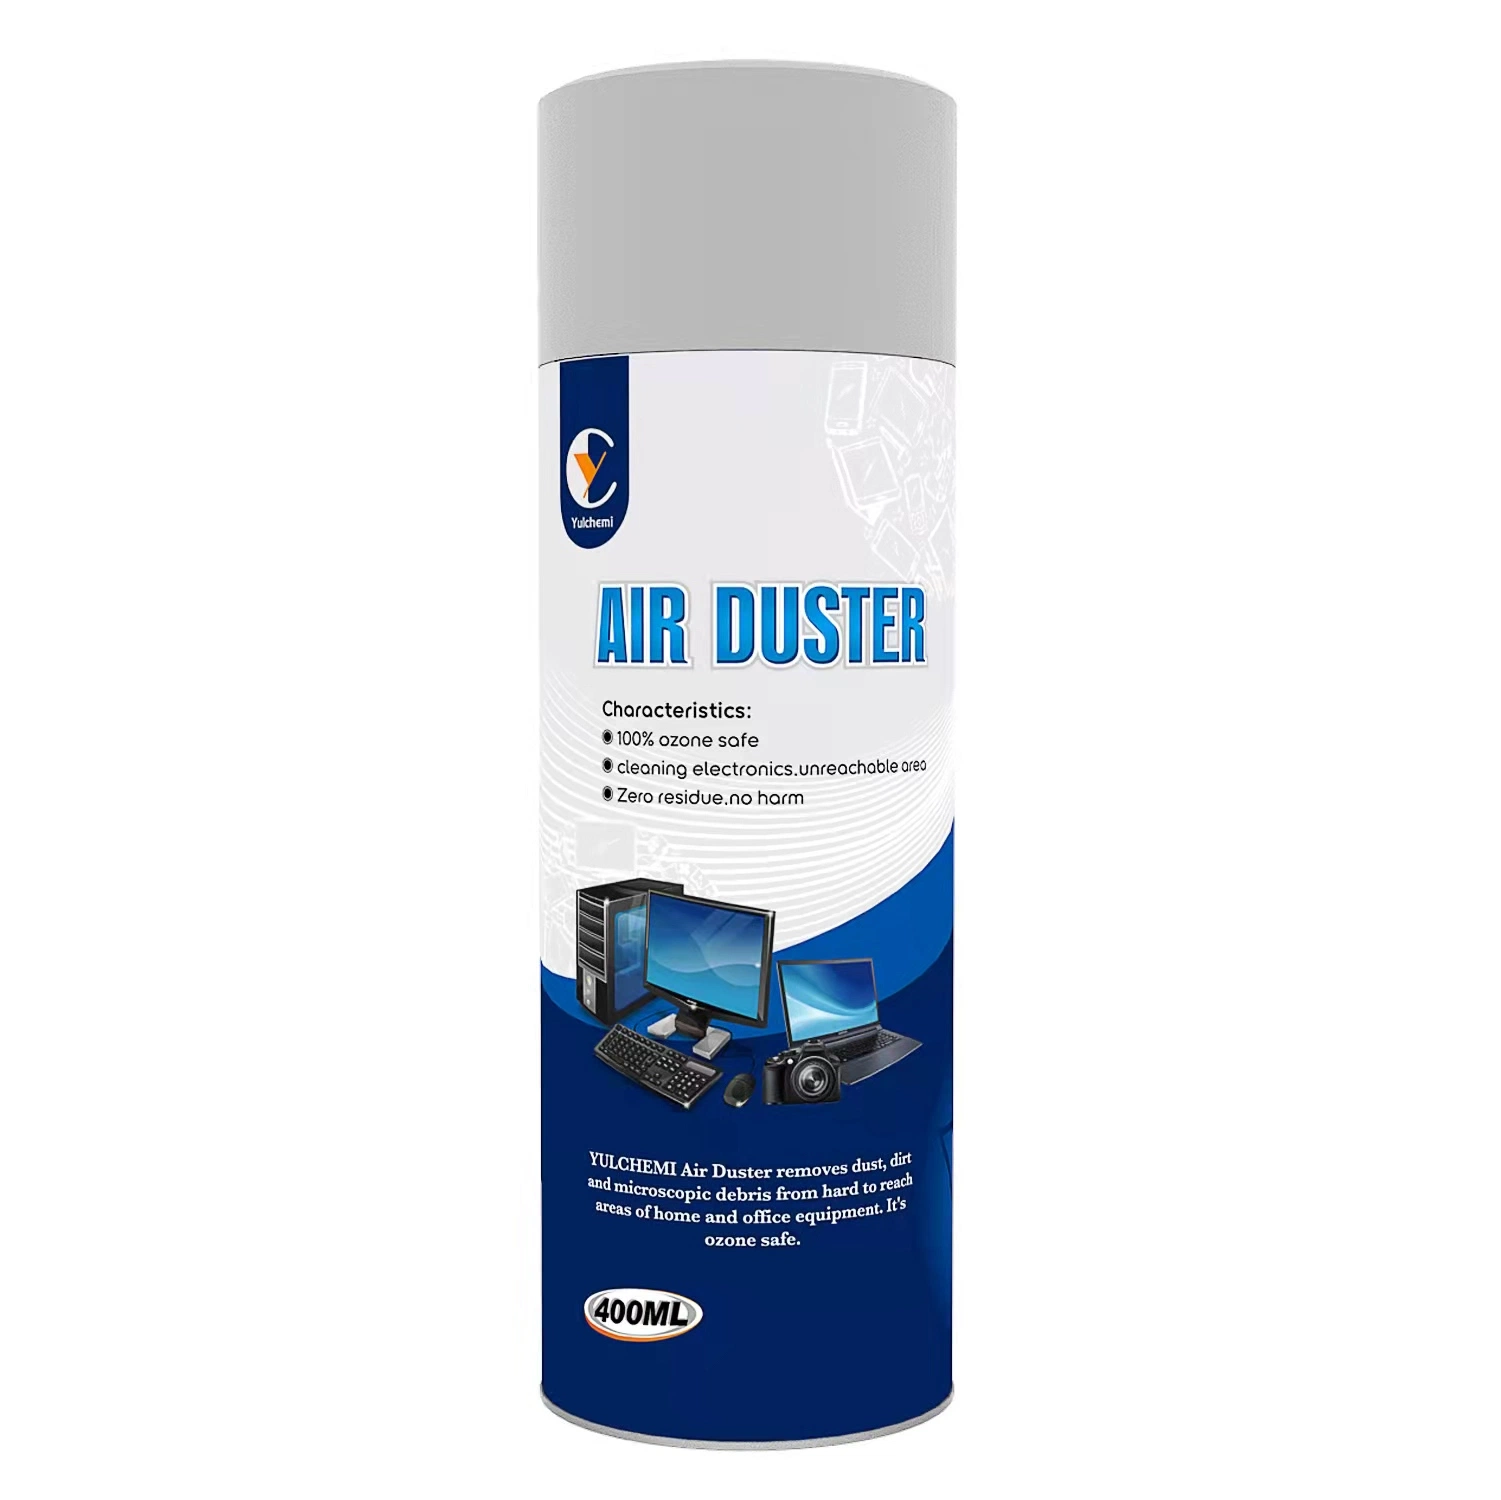 Multi Purpose Air Duster Spray Camera Computer Keyboard Cleaner